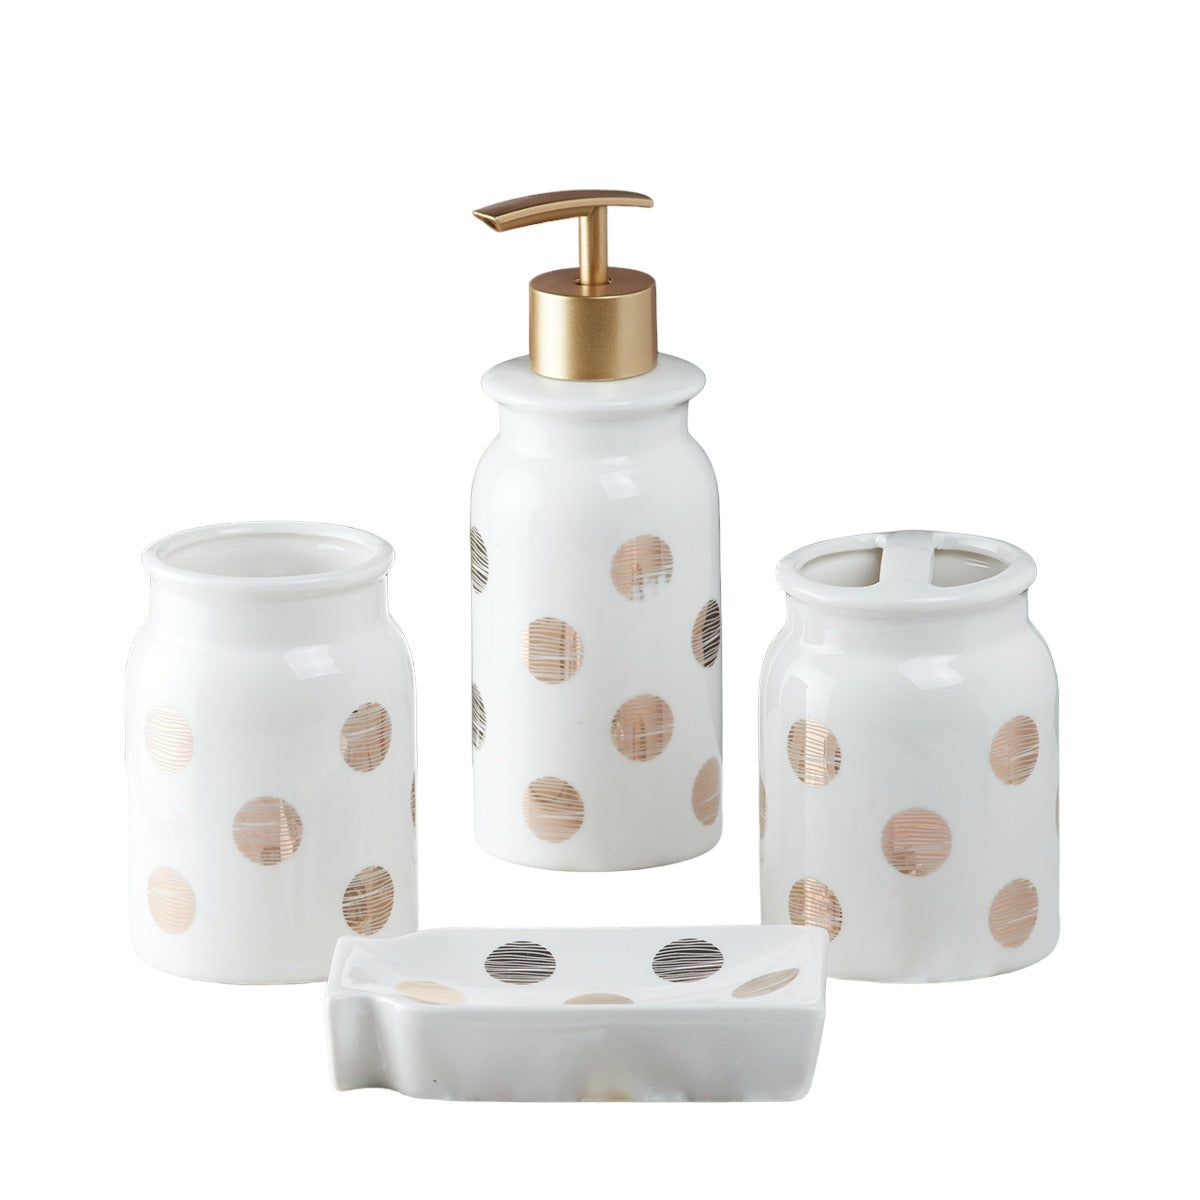 Ceramic Bathroom Set of 4 with Soap Dispenser (8237)